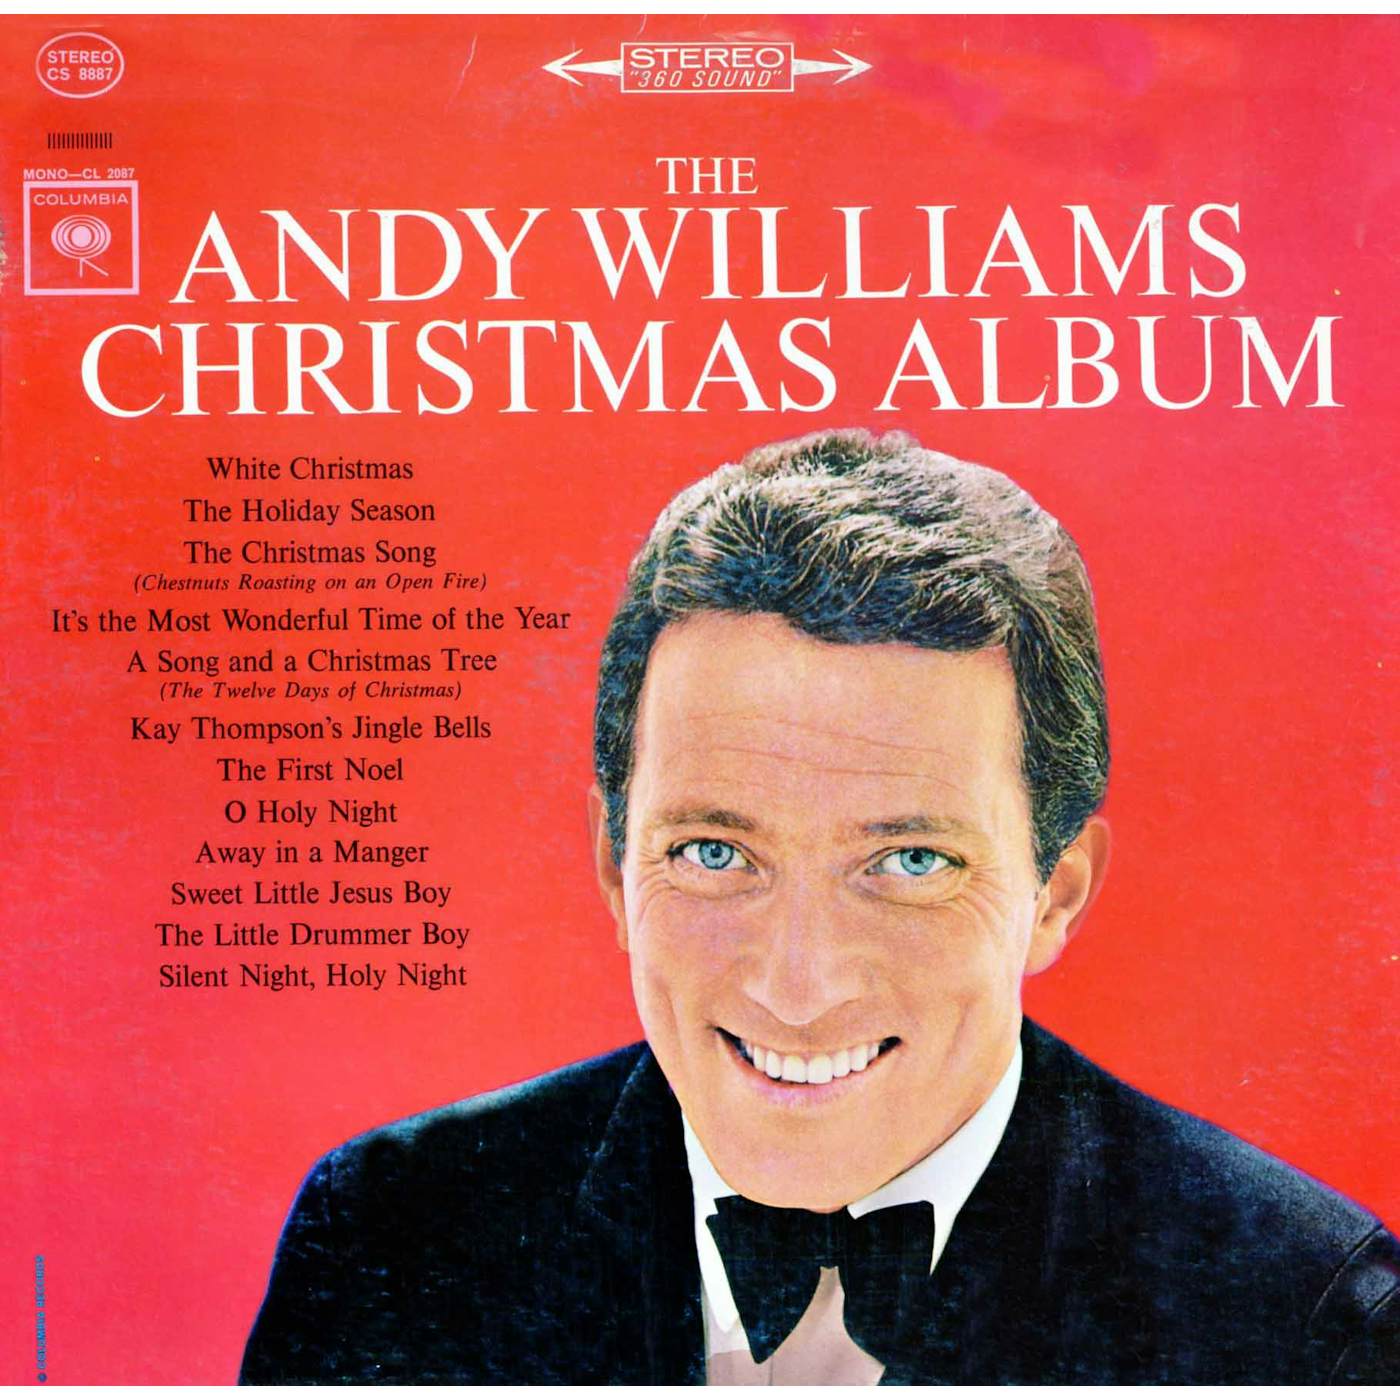 ANDY WILLIAMS CHRISTMAS ALBUM Vinyl Record